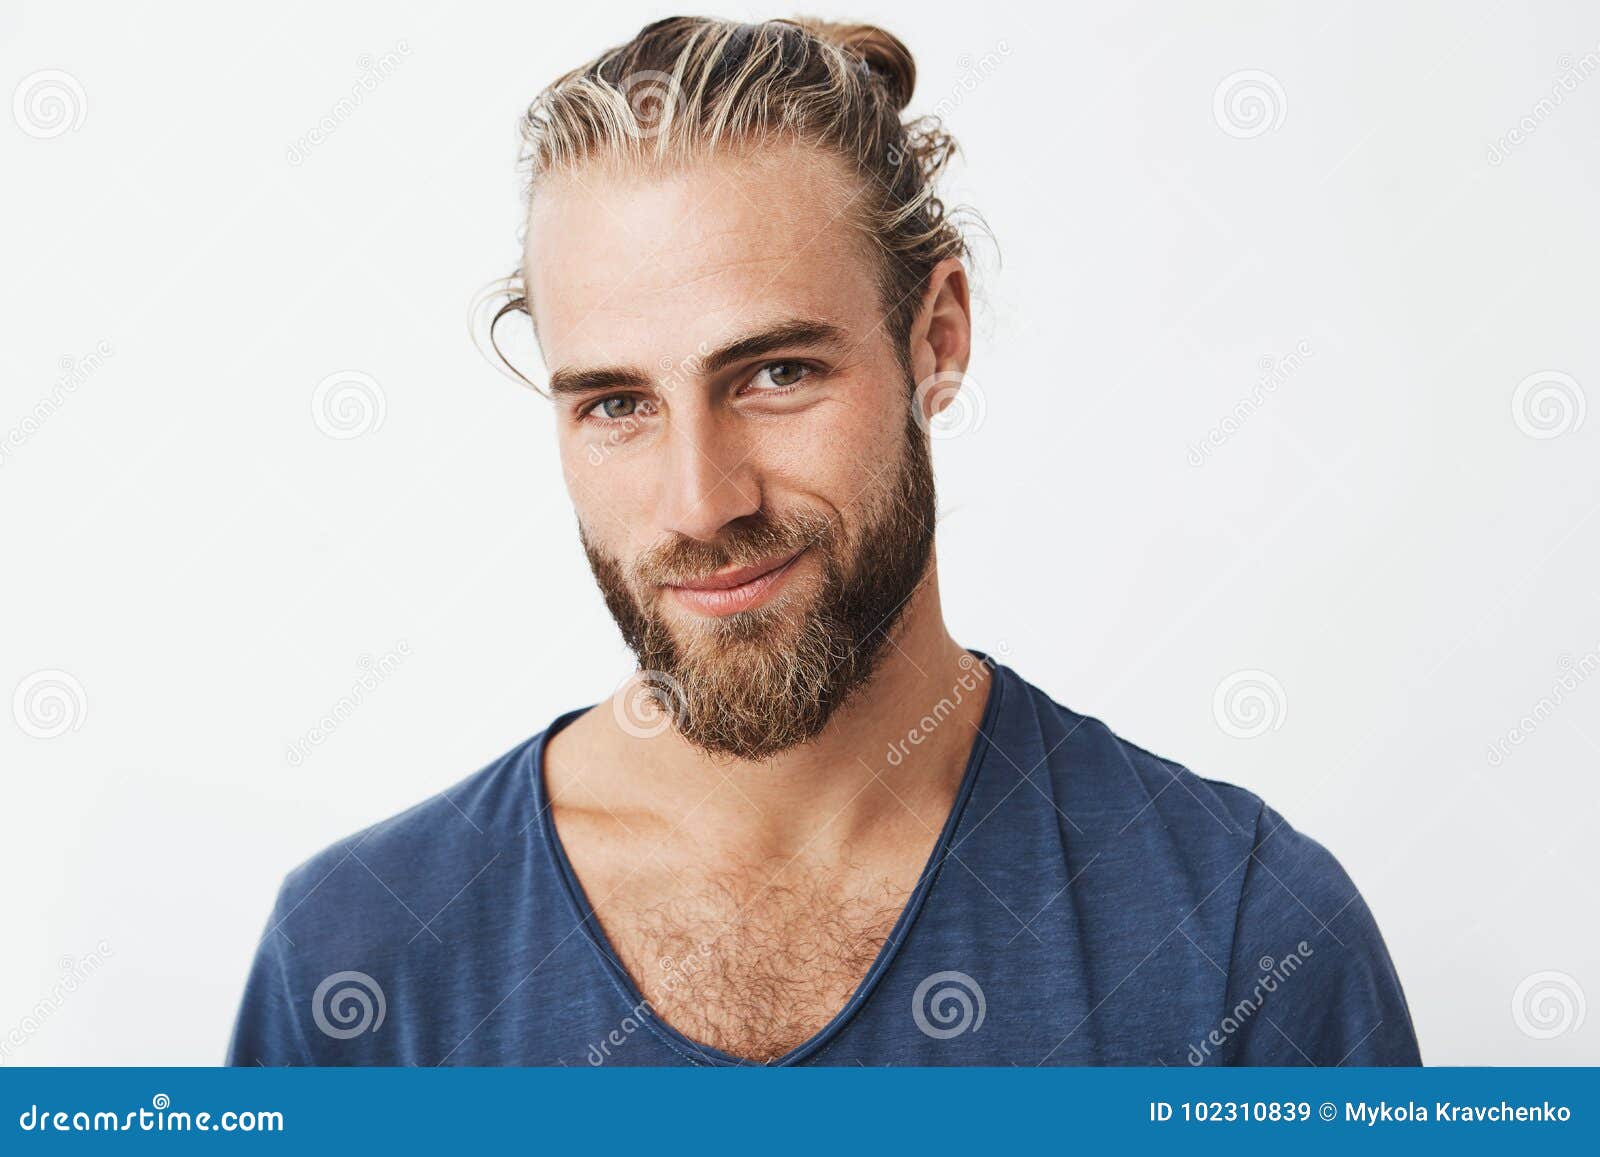 handsome-swedish-mature-guy-great-hairstyle-beard-smiling-looking-camera-confident-flirty-handsome-swedish-102310839.jpg